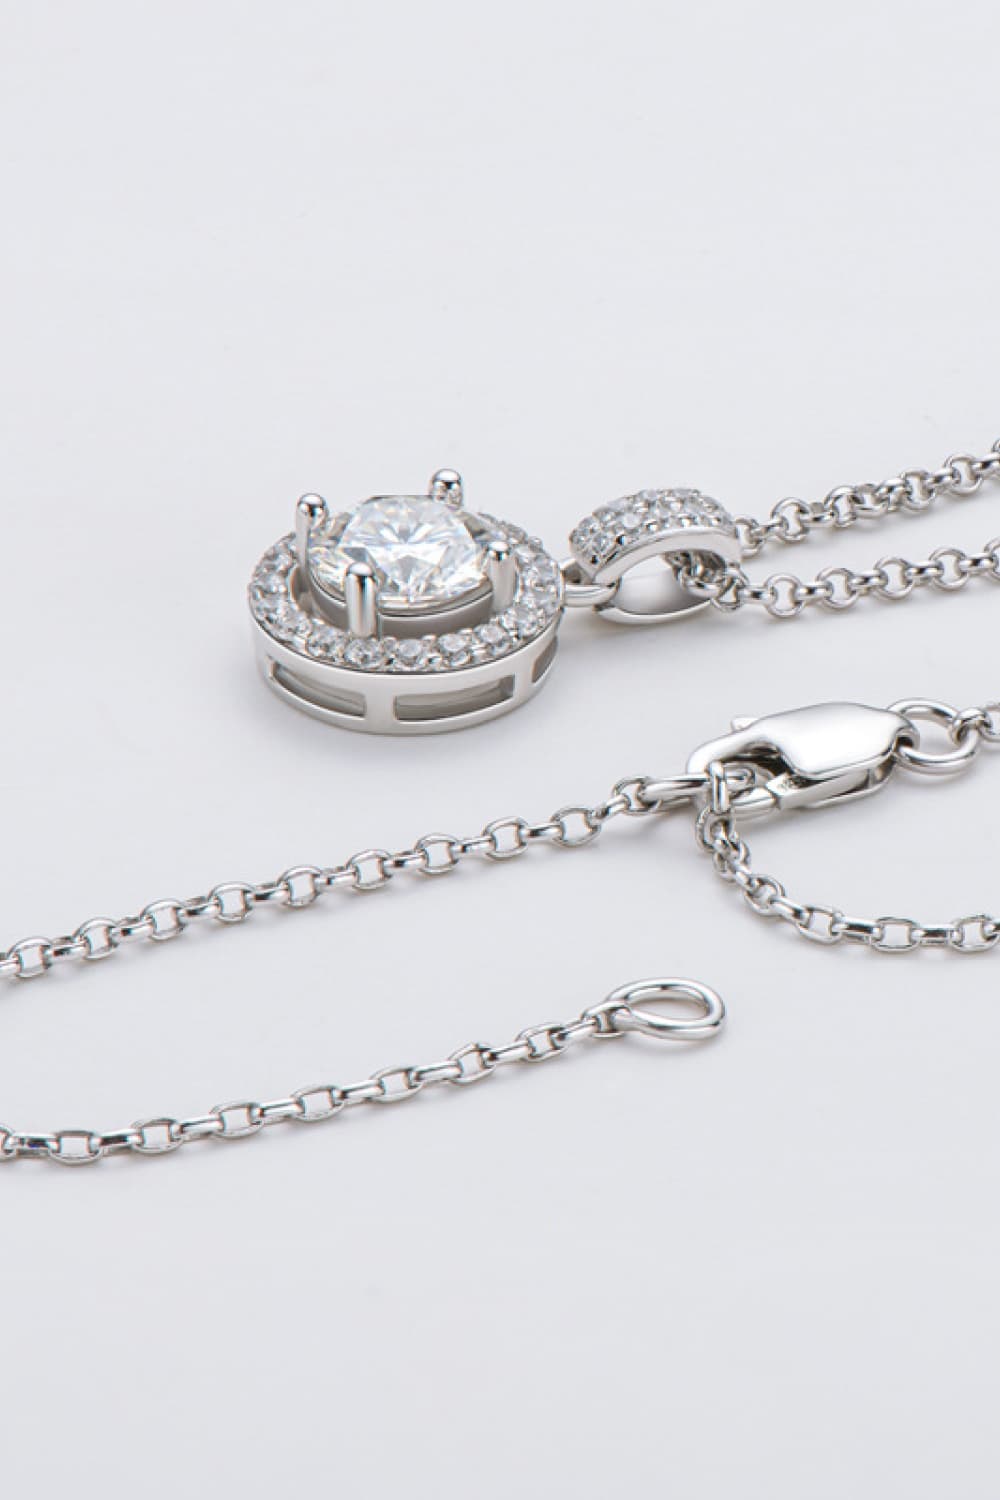 Zircon Pendant 925 Sterling Silver Necklace - FunkyPeacockStore (Store description)